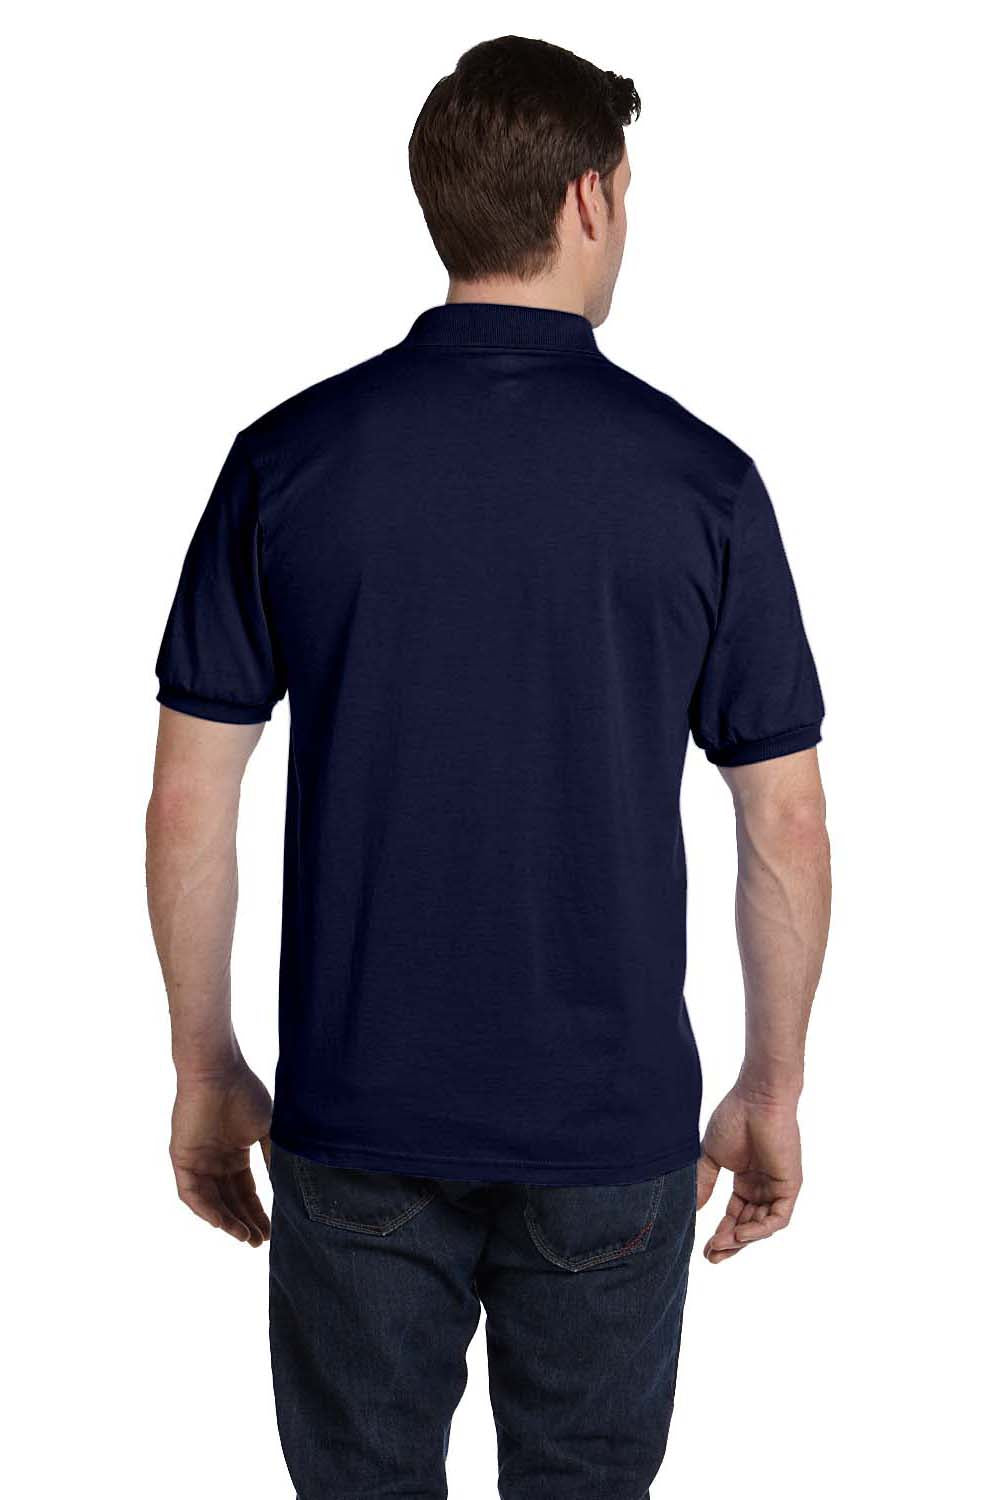 Hanes 054 Mens EcoSmart Short Sleeve Polo Shirt Navy Blue Back